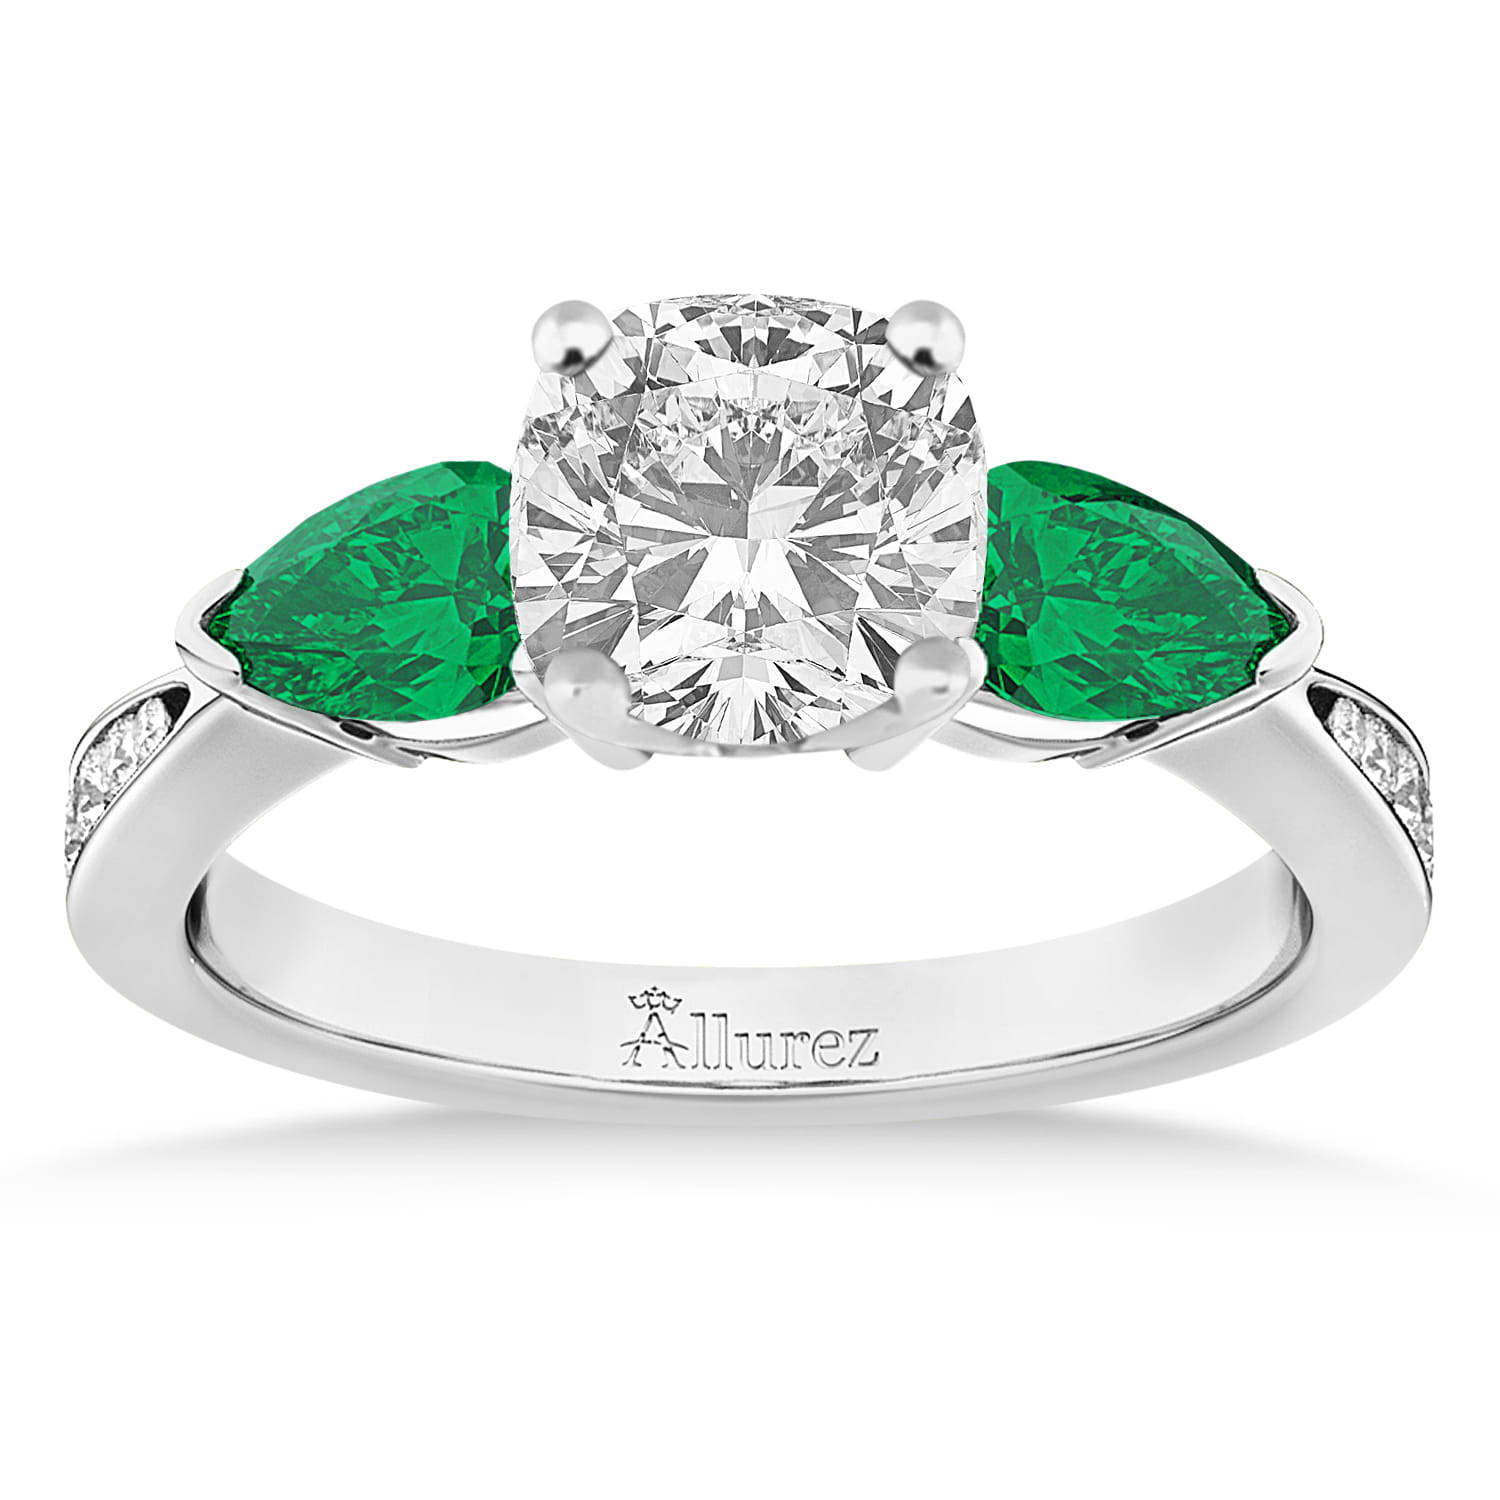 Cushion Diamond & Pear Green Emerald Engagement Ring 14k White Gold (1.29ct)